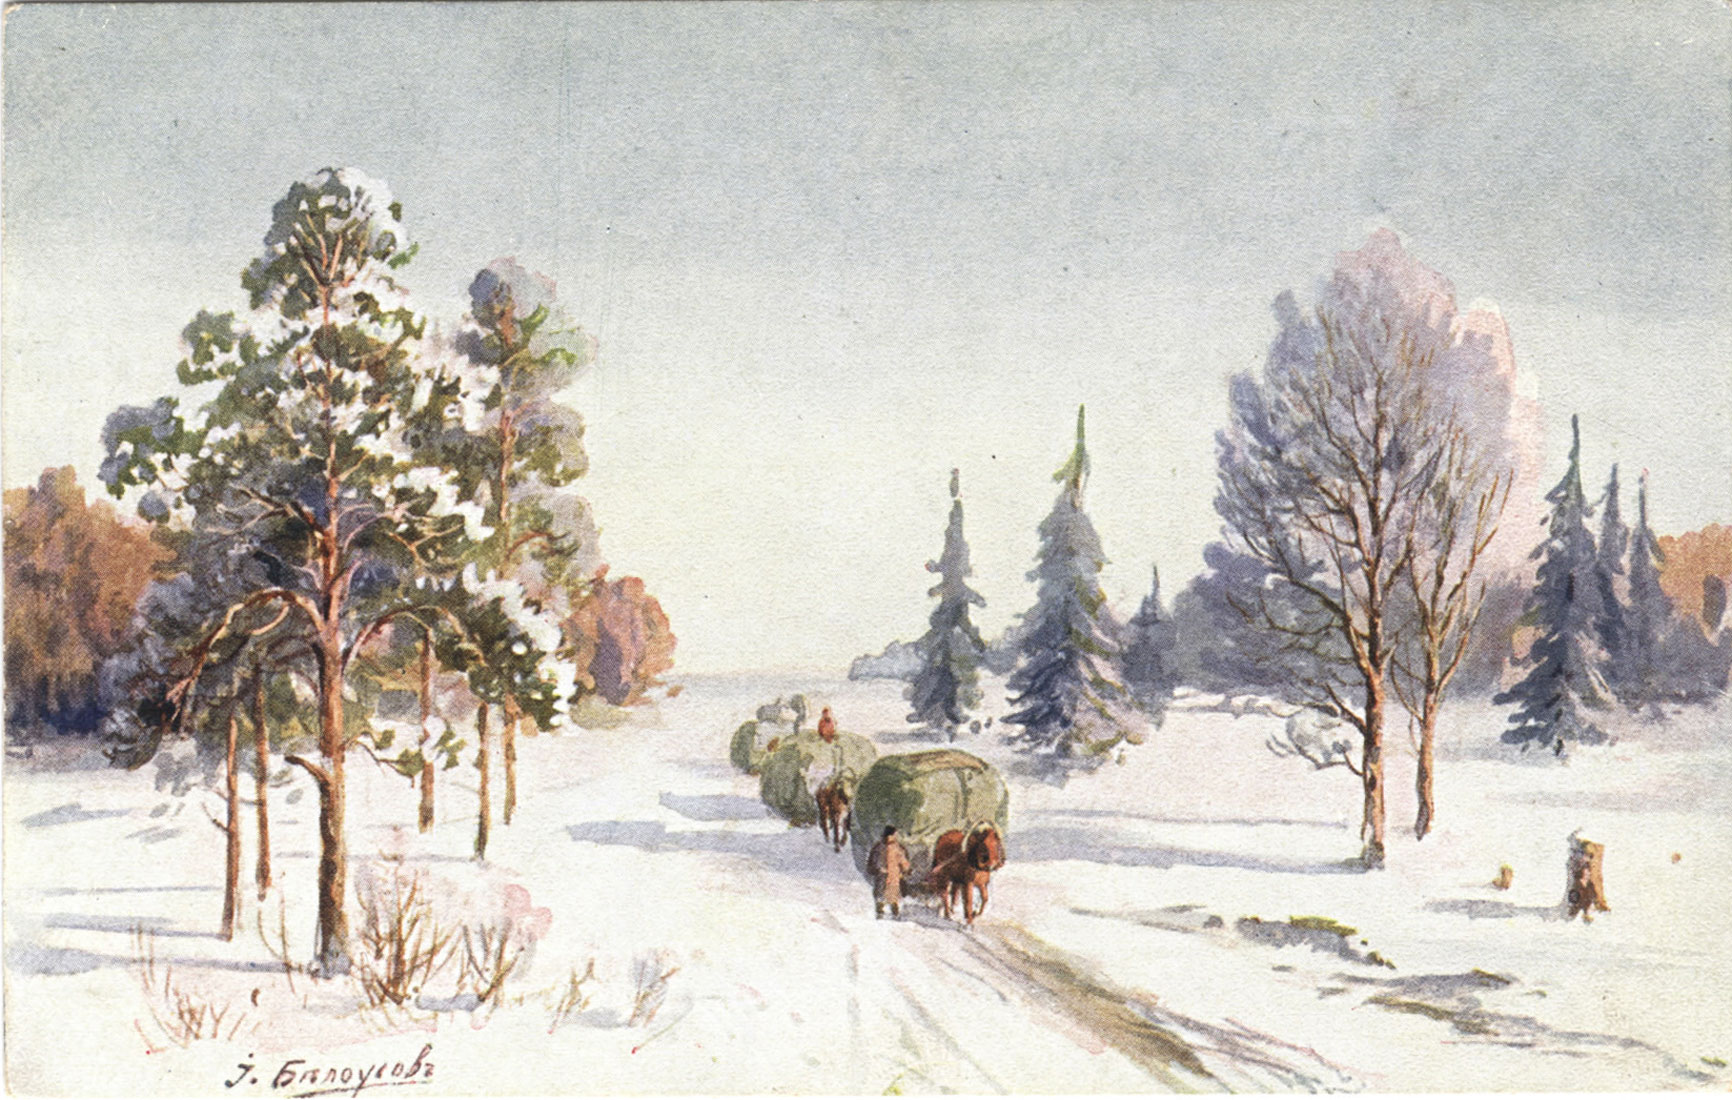 Im Winter : [открытка]. - [S. l.] : H. A. W., [между 1904 и 1917]. - Цветная автотипия ; 8,8х13,9 см. - (Serie 67).